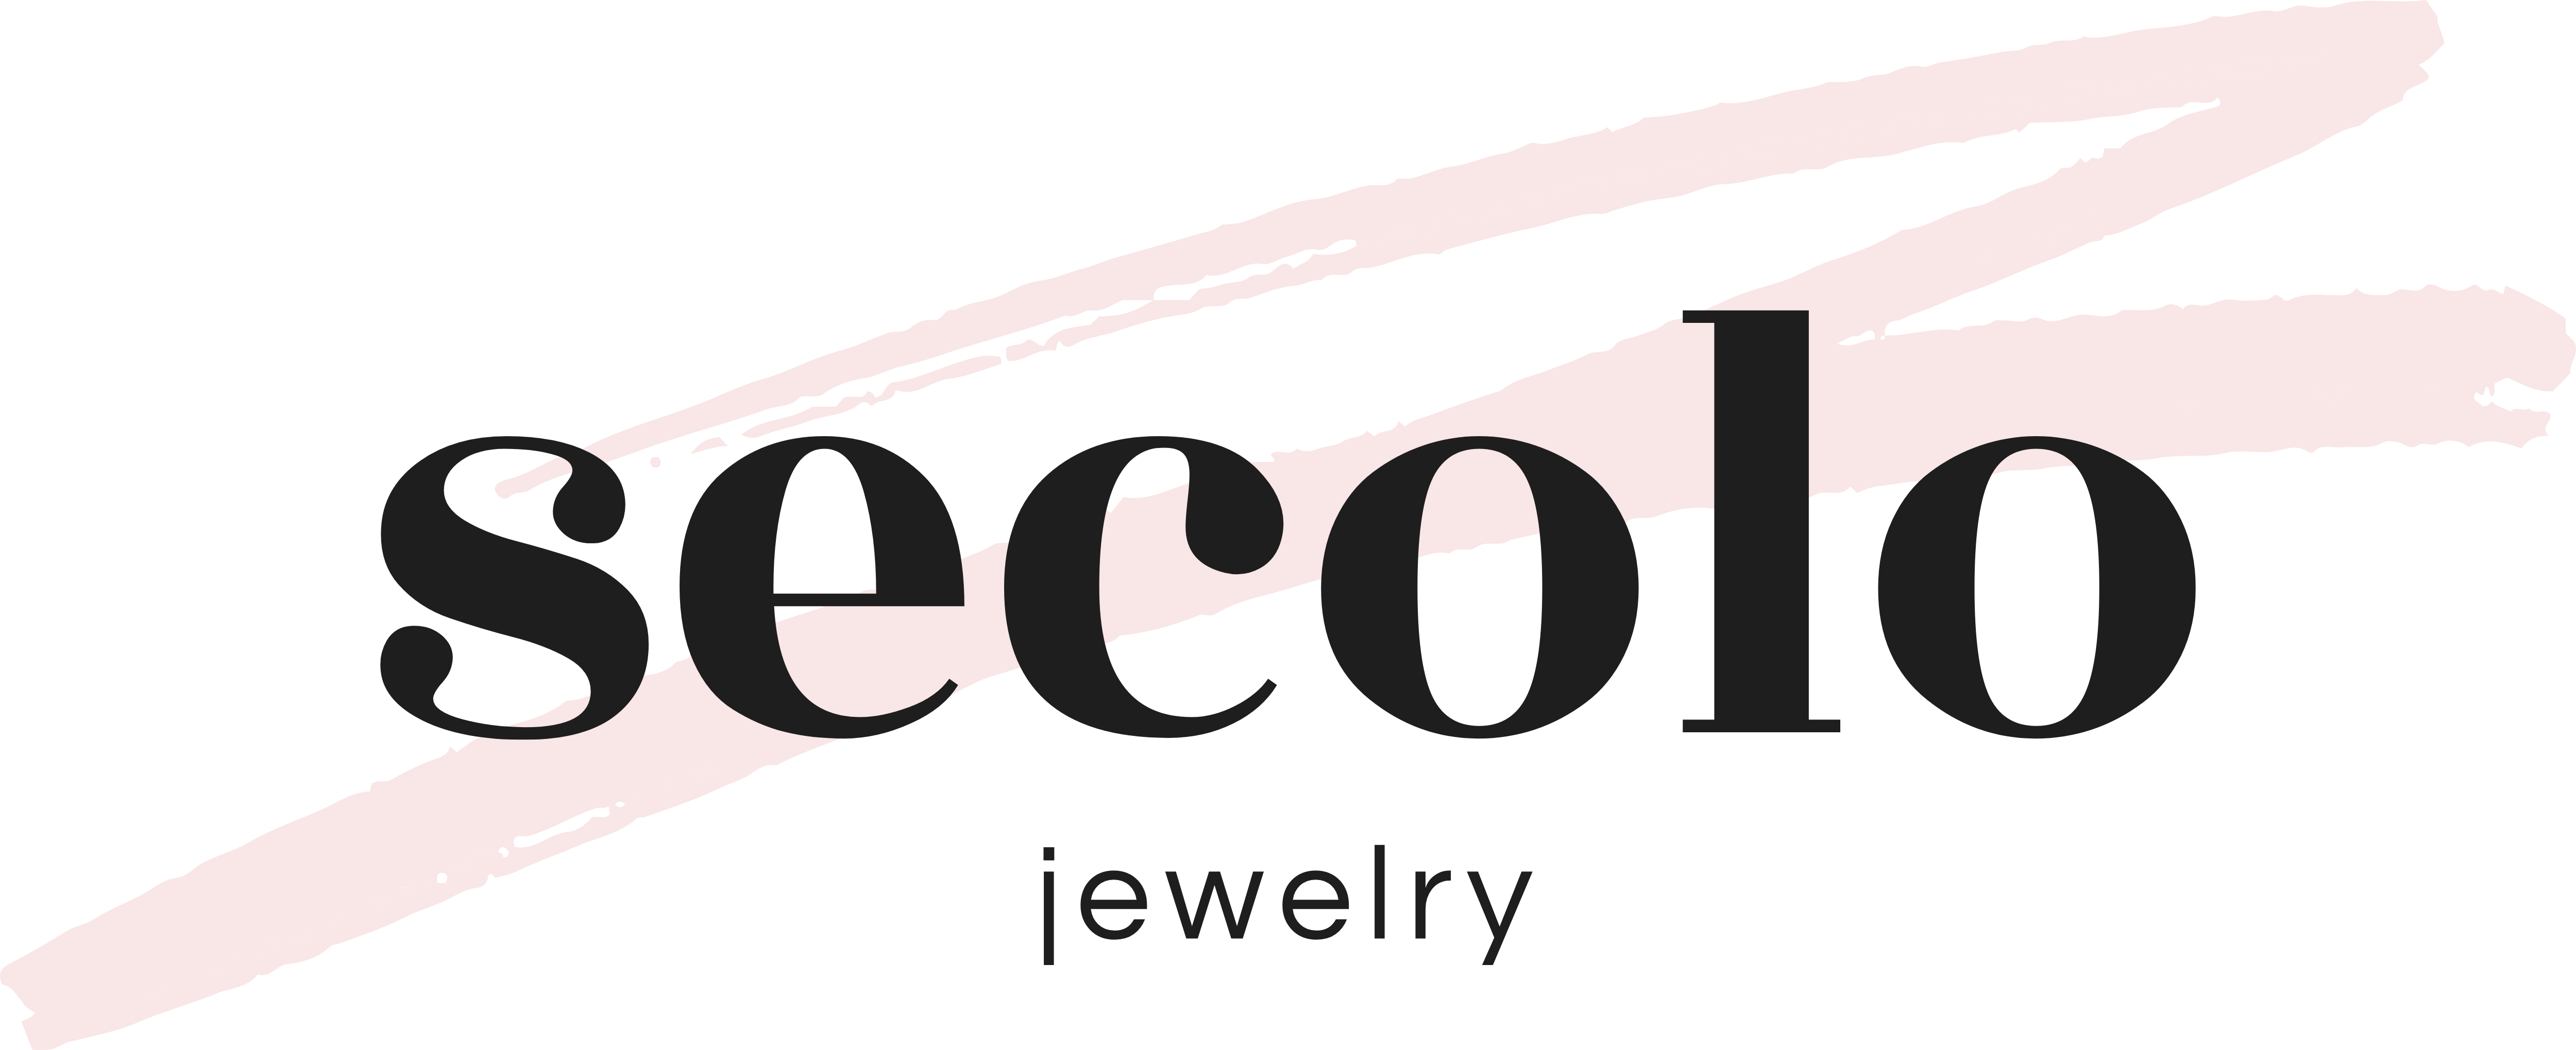 Secolo Jewelry - סקולו תכשיטים